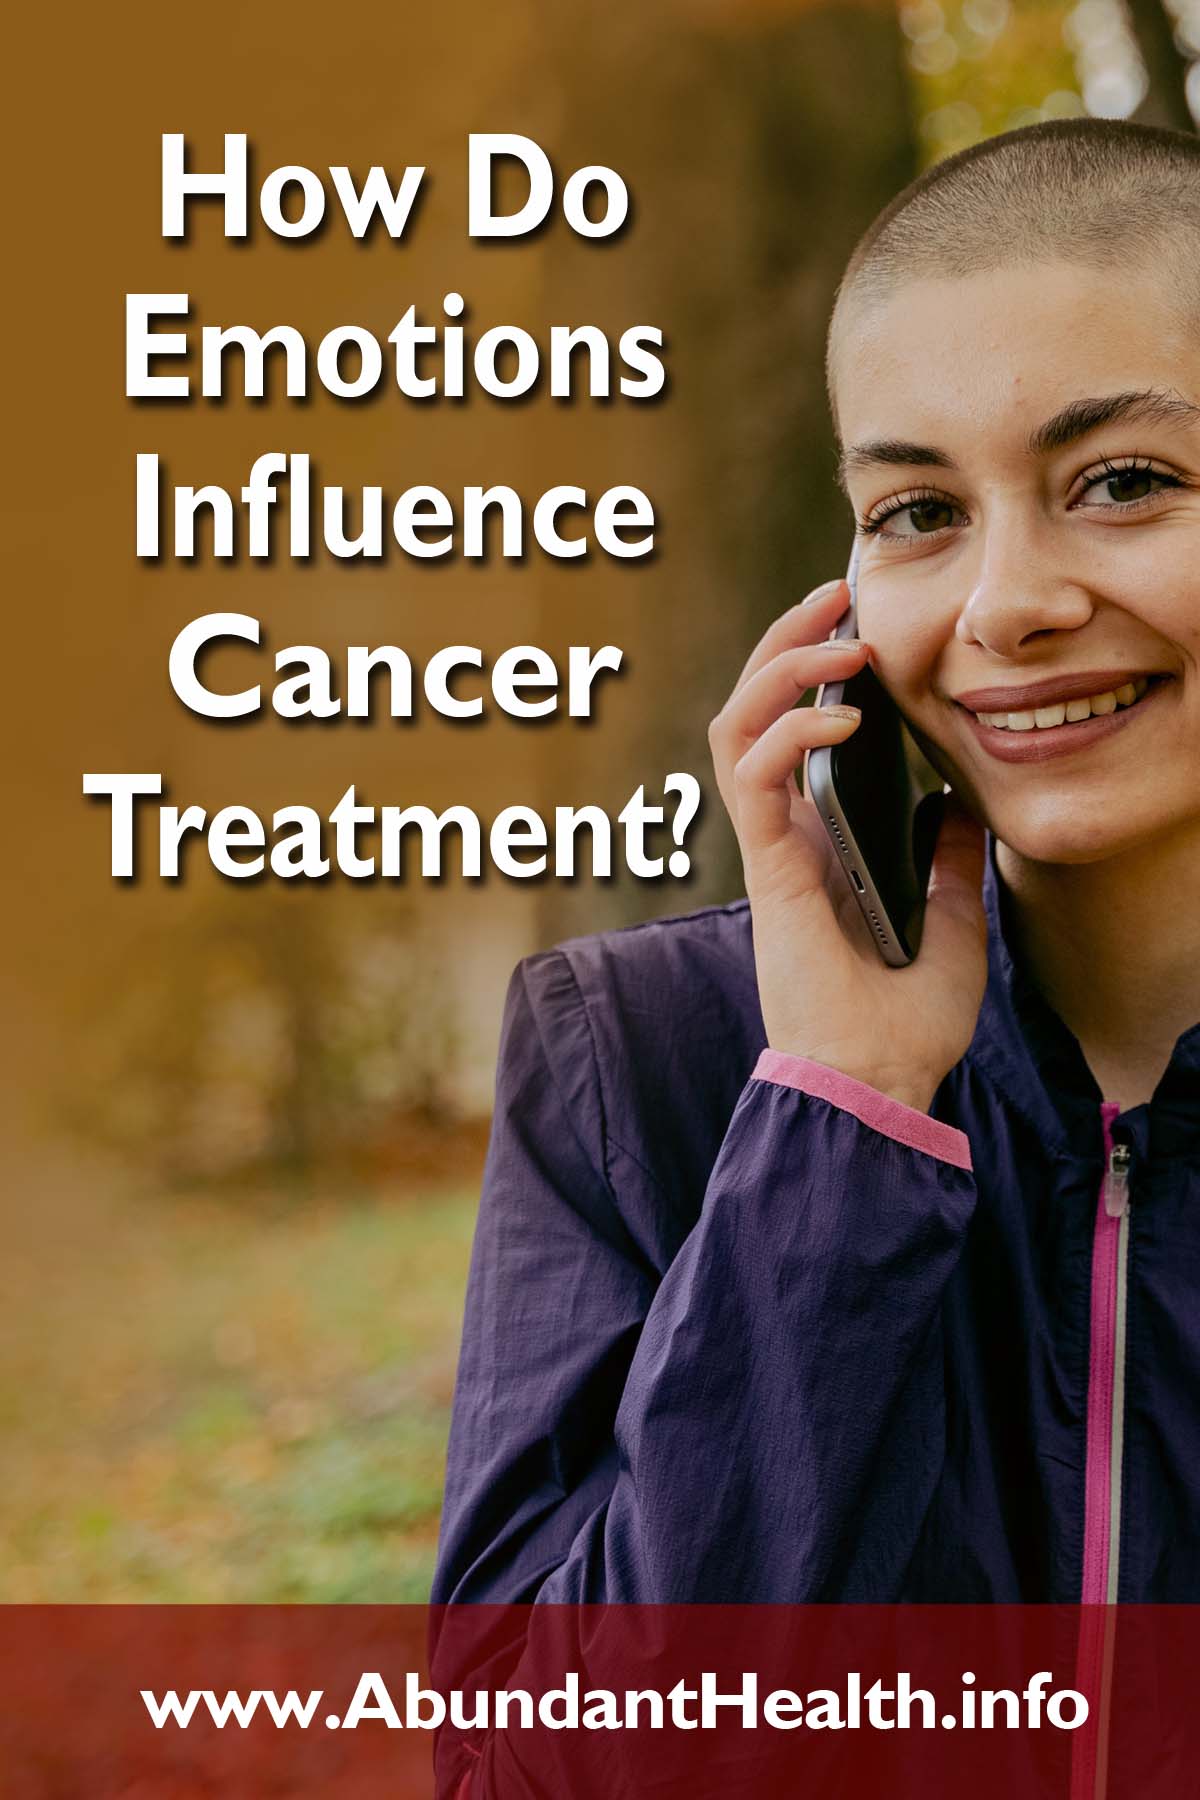 How Do Emotions Influence Cancer Treatment?